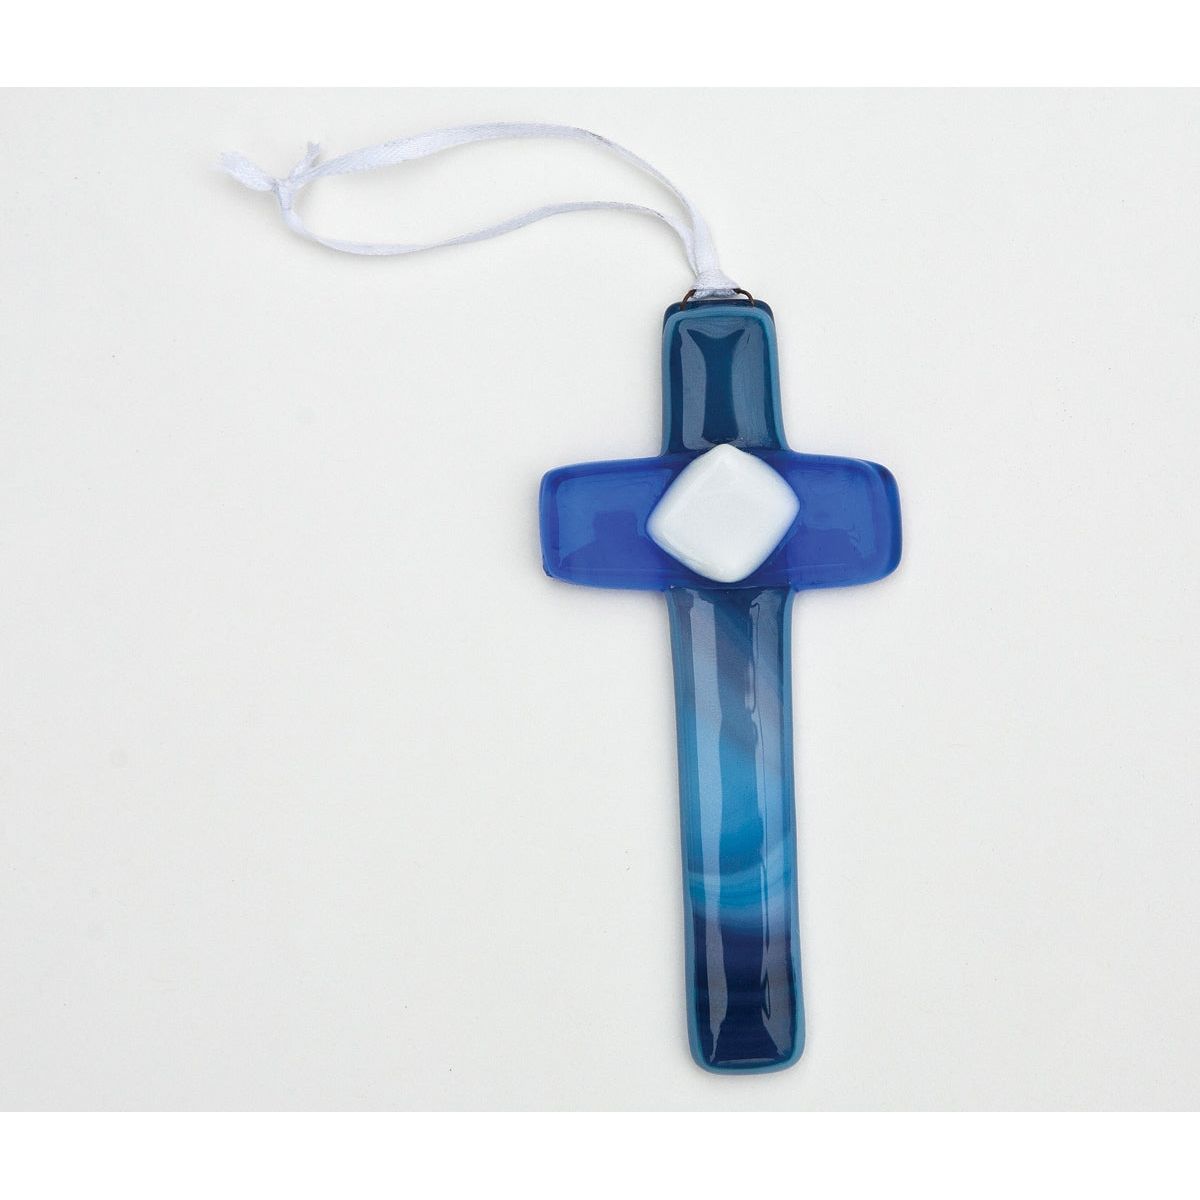 Pastor Cross: Handmade USA Glass